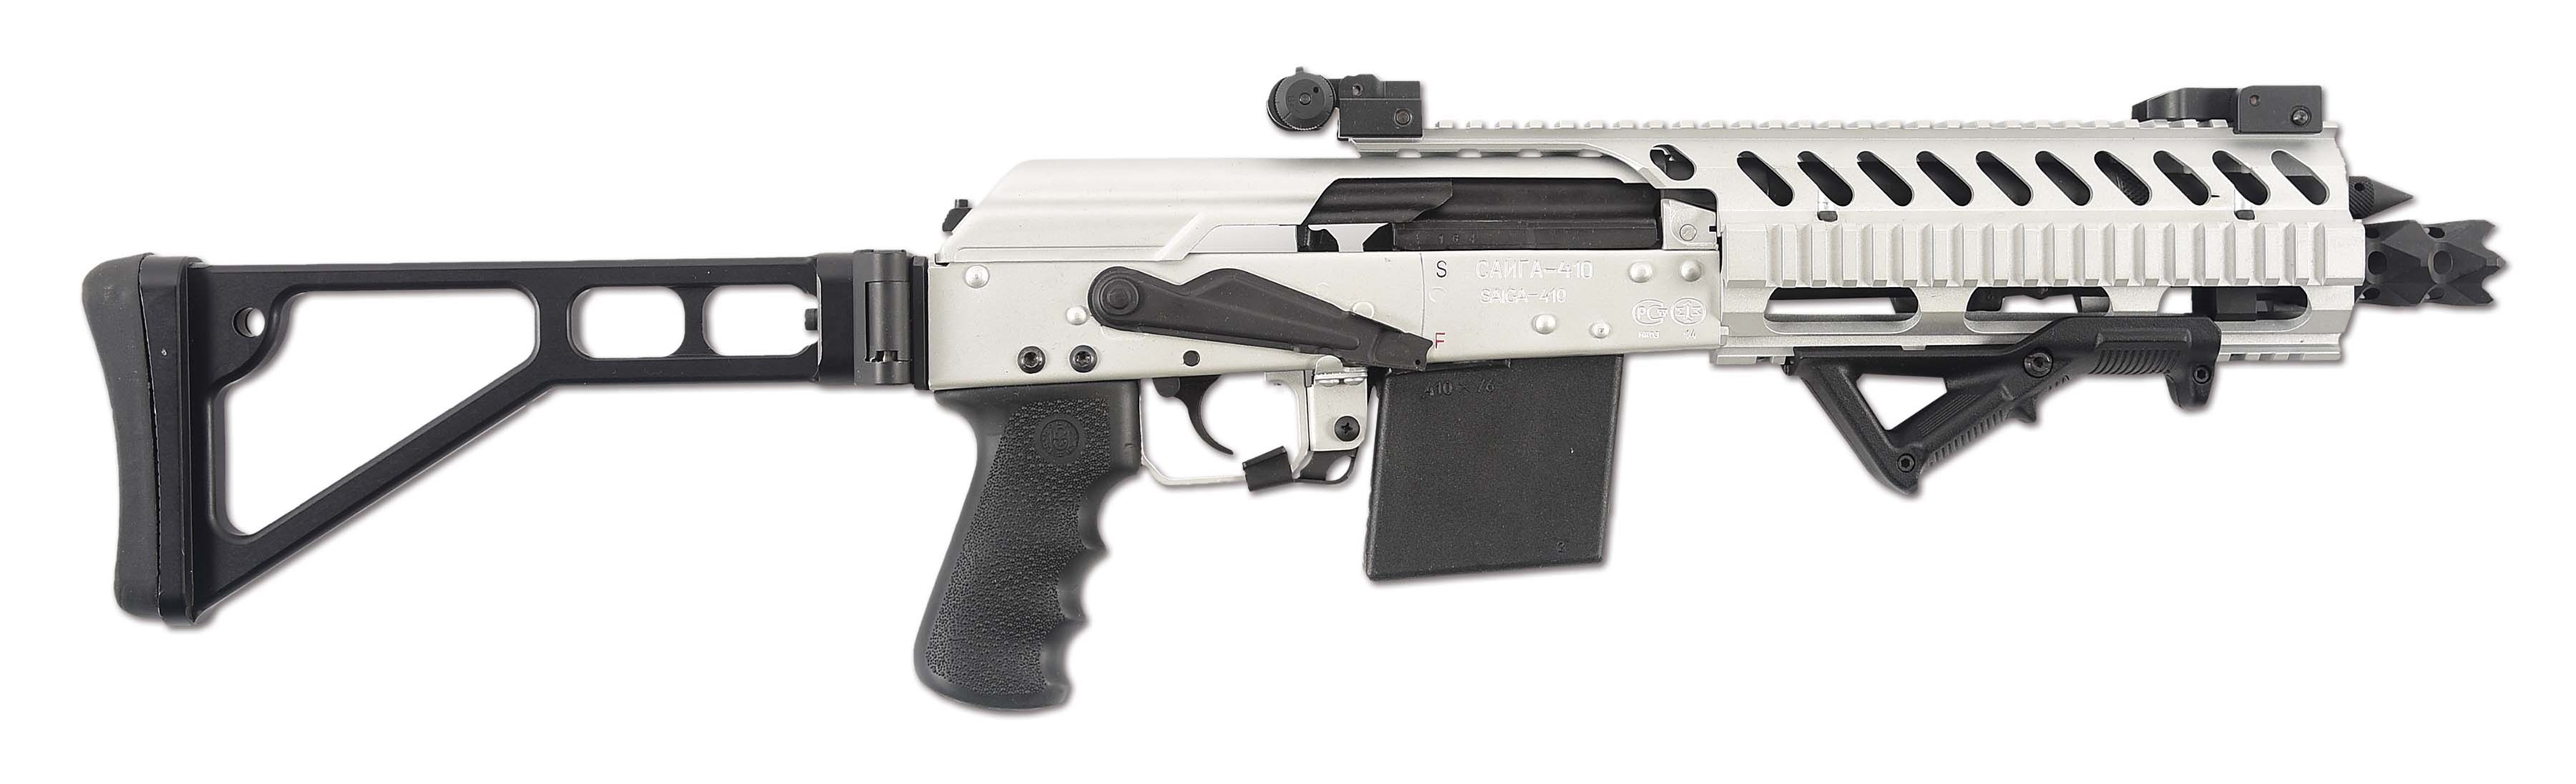 (N) IZHMASH SAIGA-410 SEMI-AUTOMATIC SHORT BARREL SHOTGUN CUSTOM MODIFIED BY HATCHER GUN CO. (SHORT BARREL SHOTGUN).